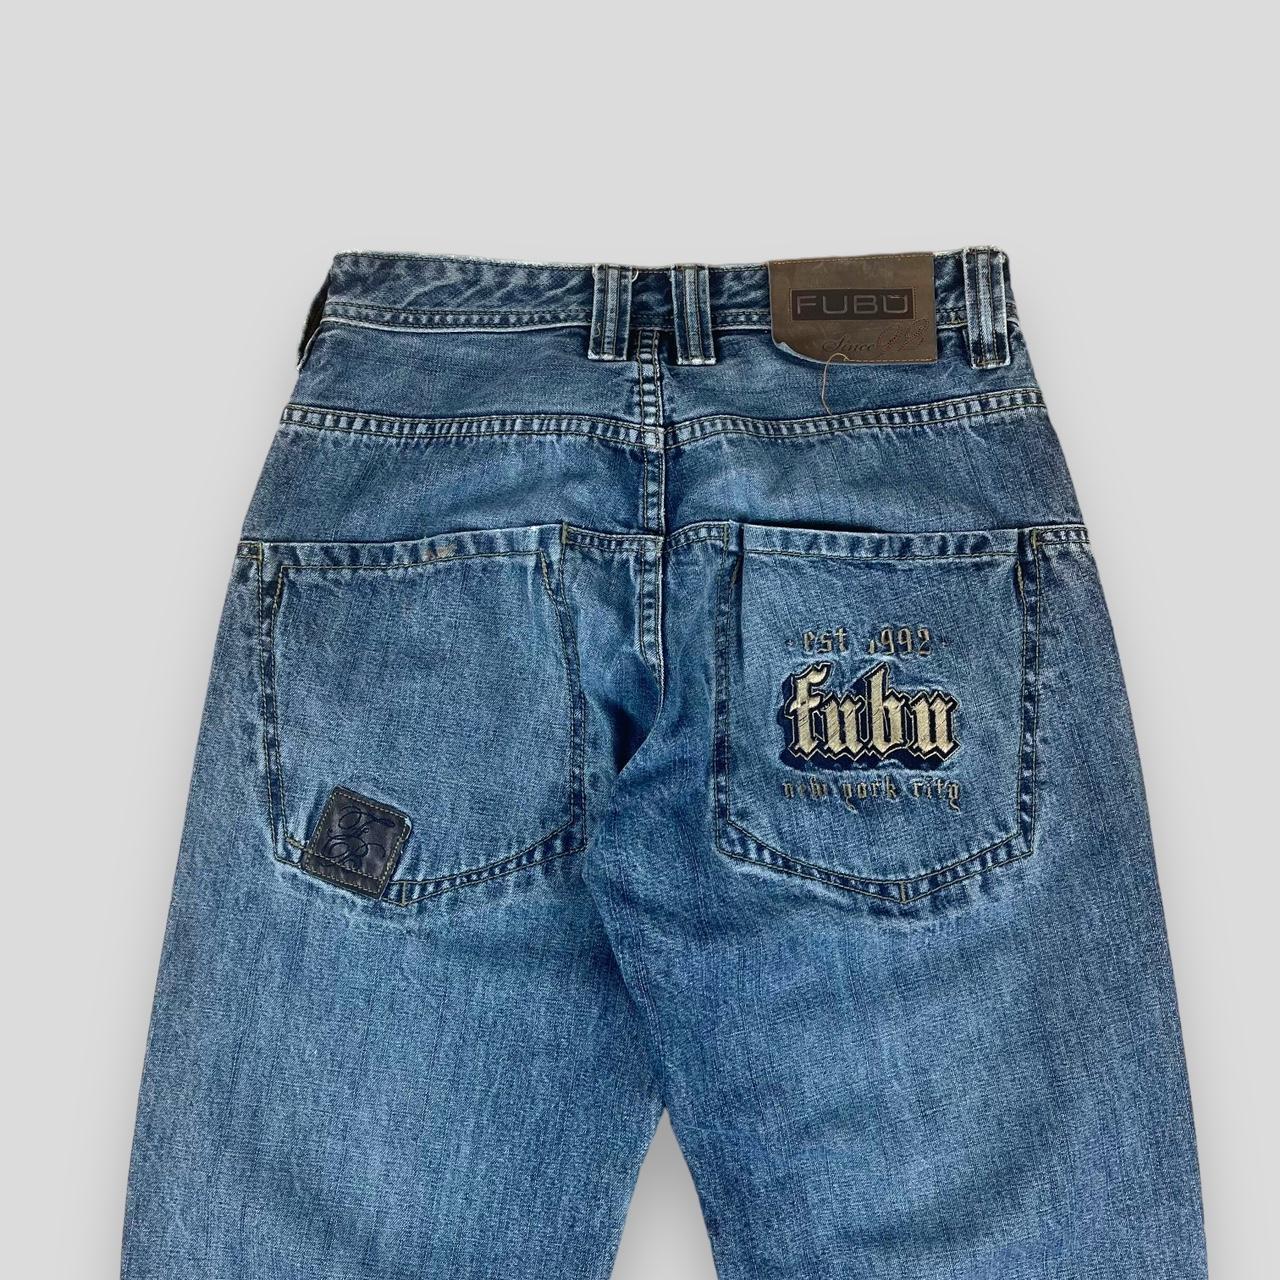 Fubu Jeans Vintage 90s Please check... - Depop